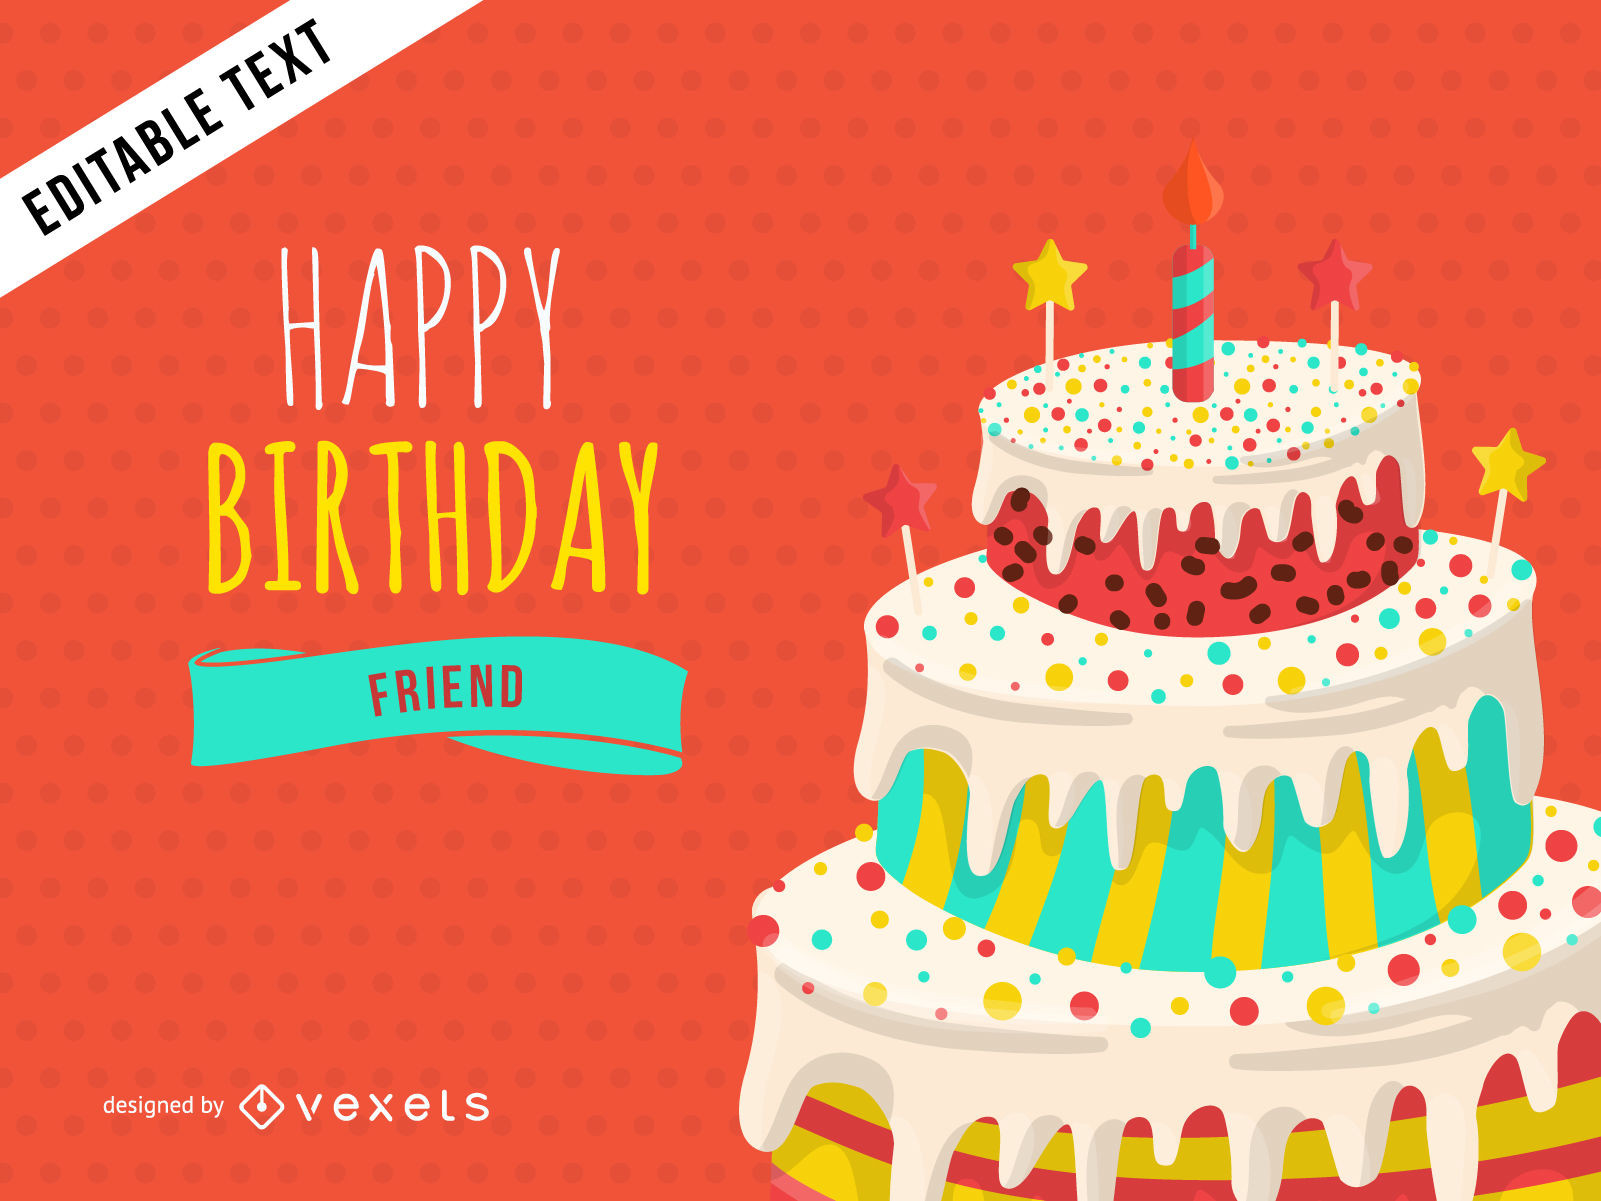 Best ideas about Happy Birthday Card Design
. Save or Pin Happy Birthday greeting card design Vector Now.